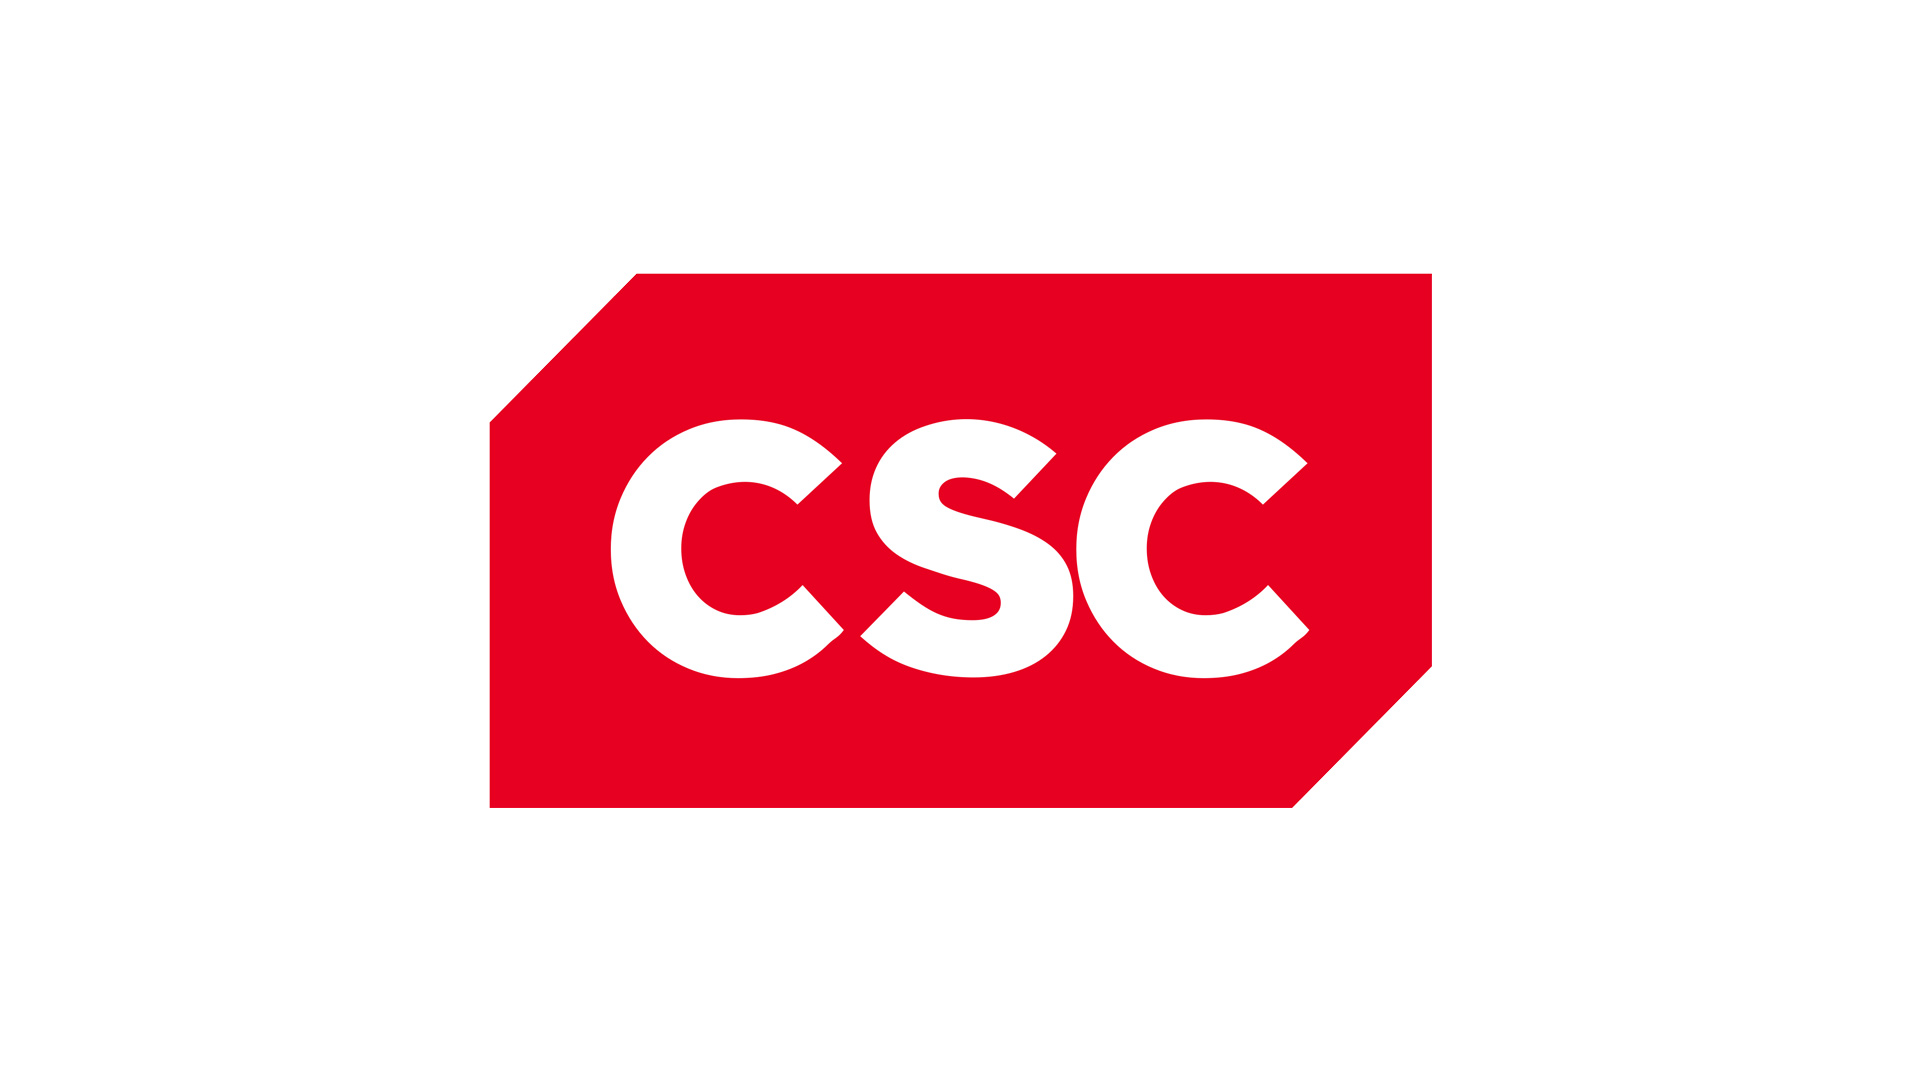 CSC Thema: De cloud onthuld